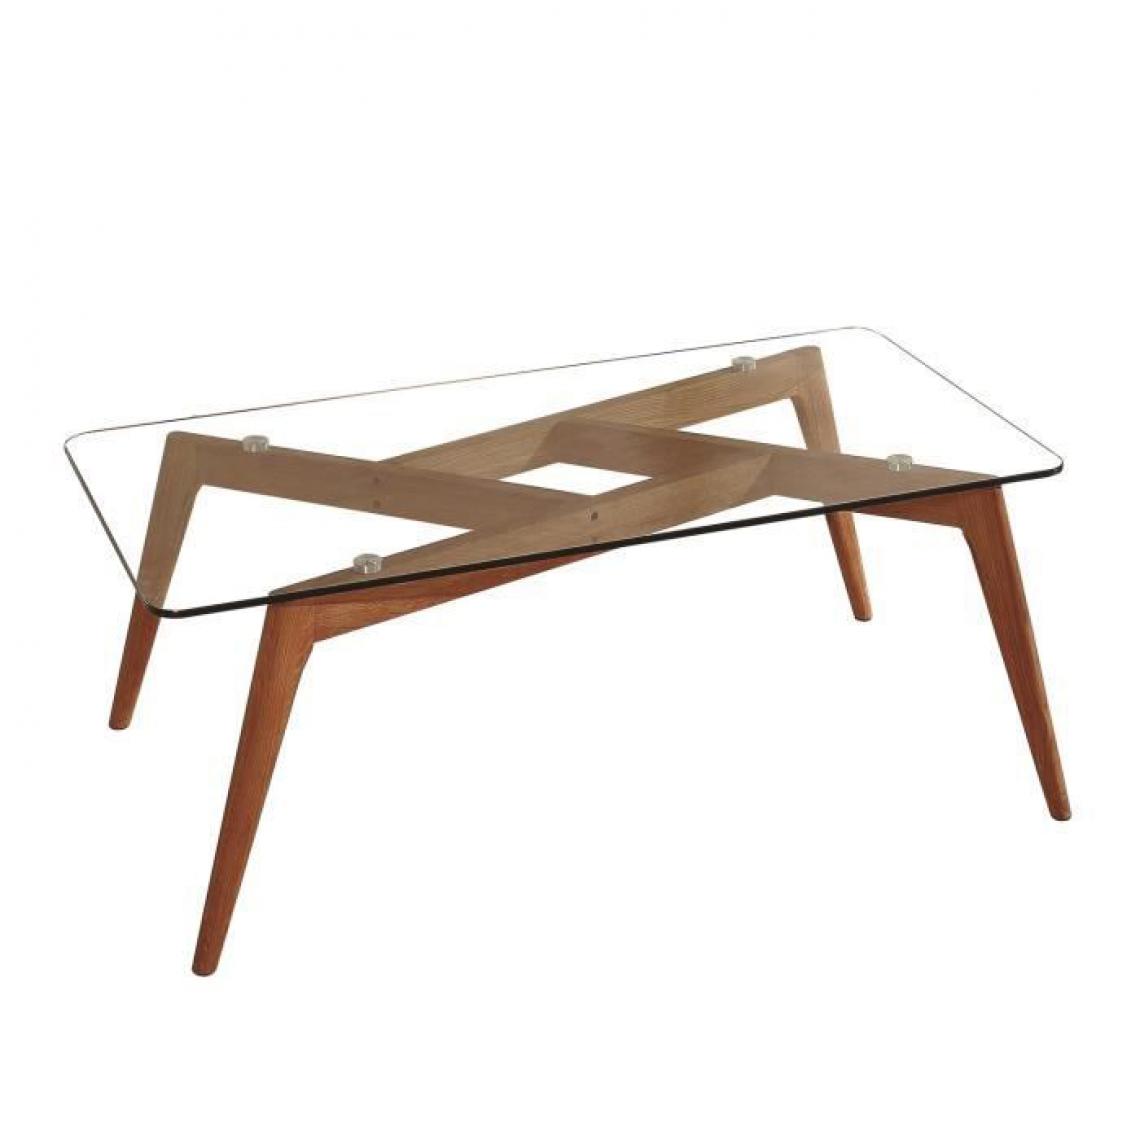 Cstore - Table salon rectangle - L 120 x P 70 x H 45 cm - Anis frêne - Tables basses